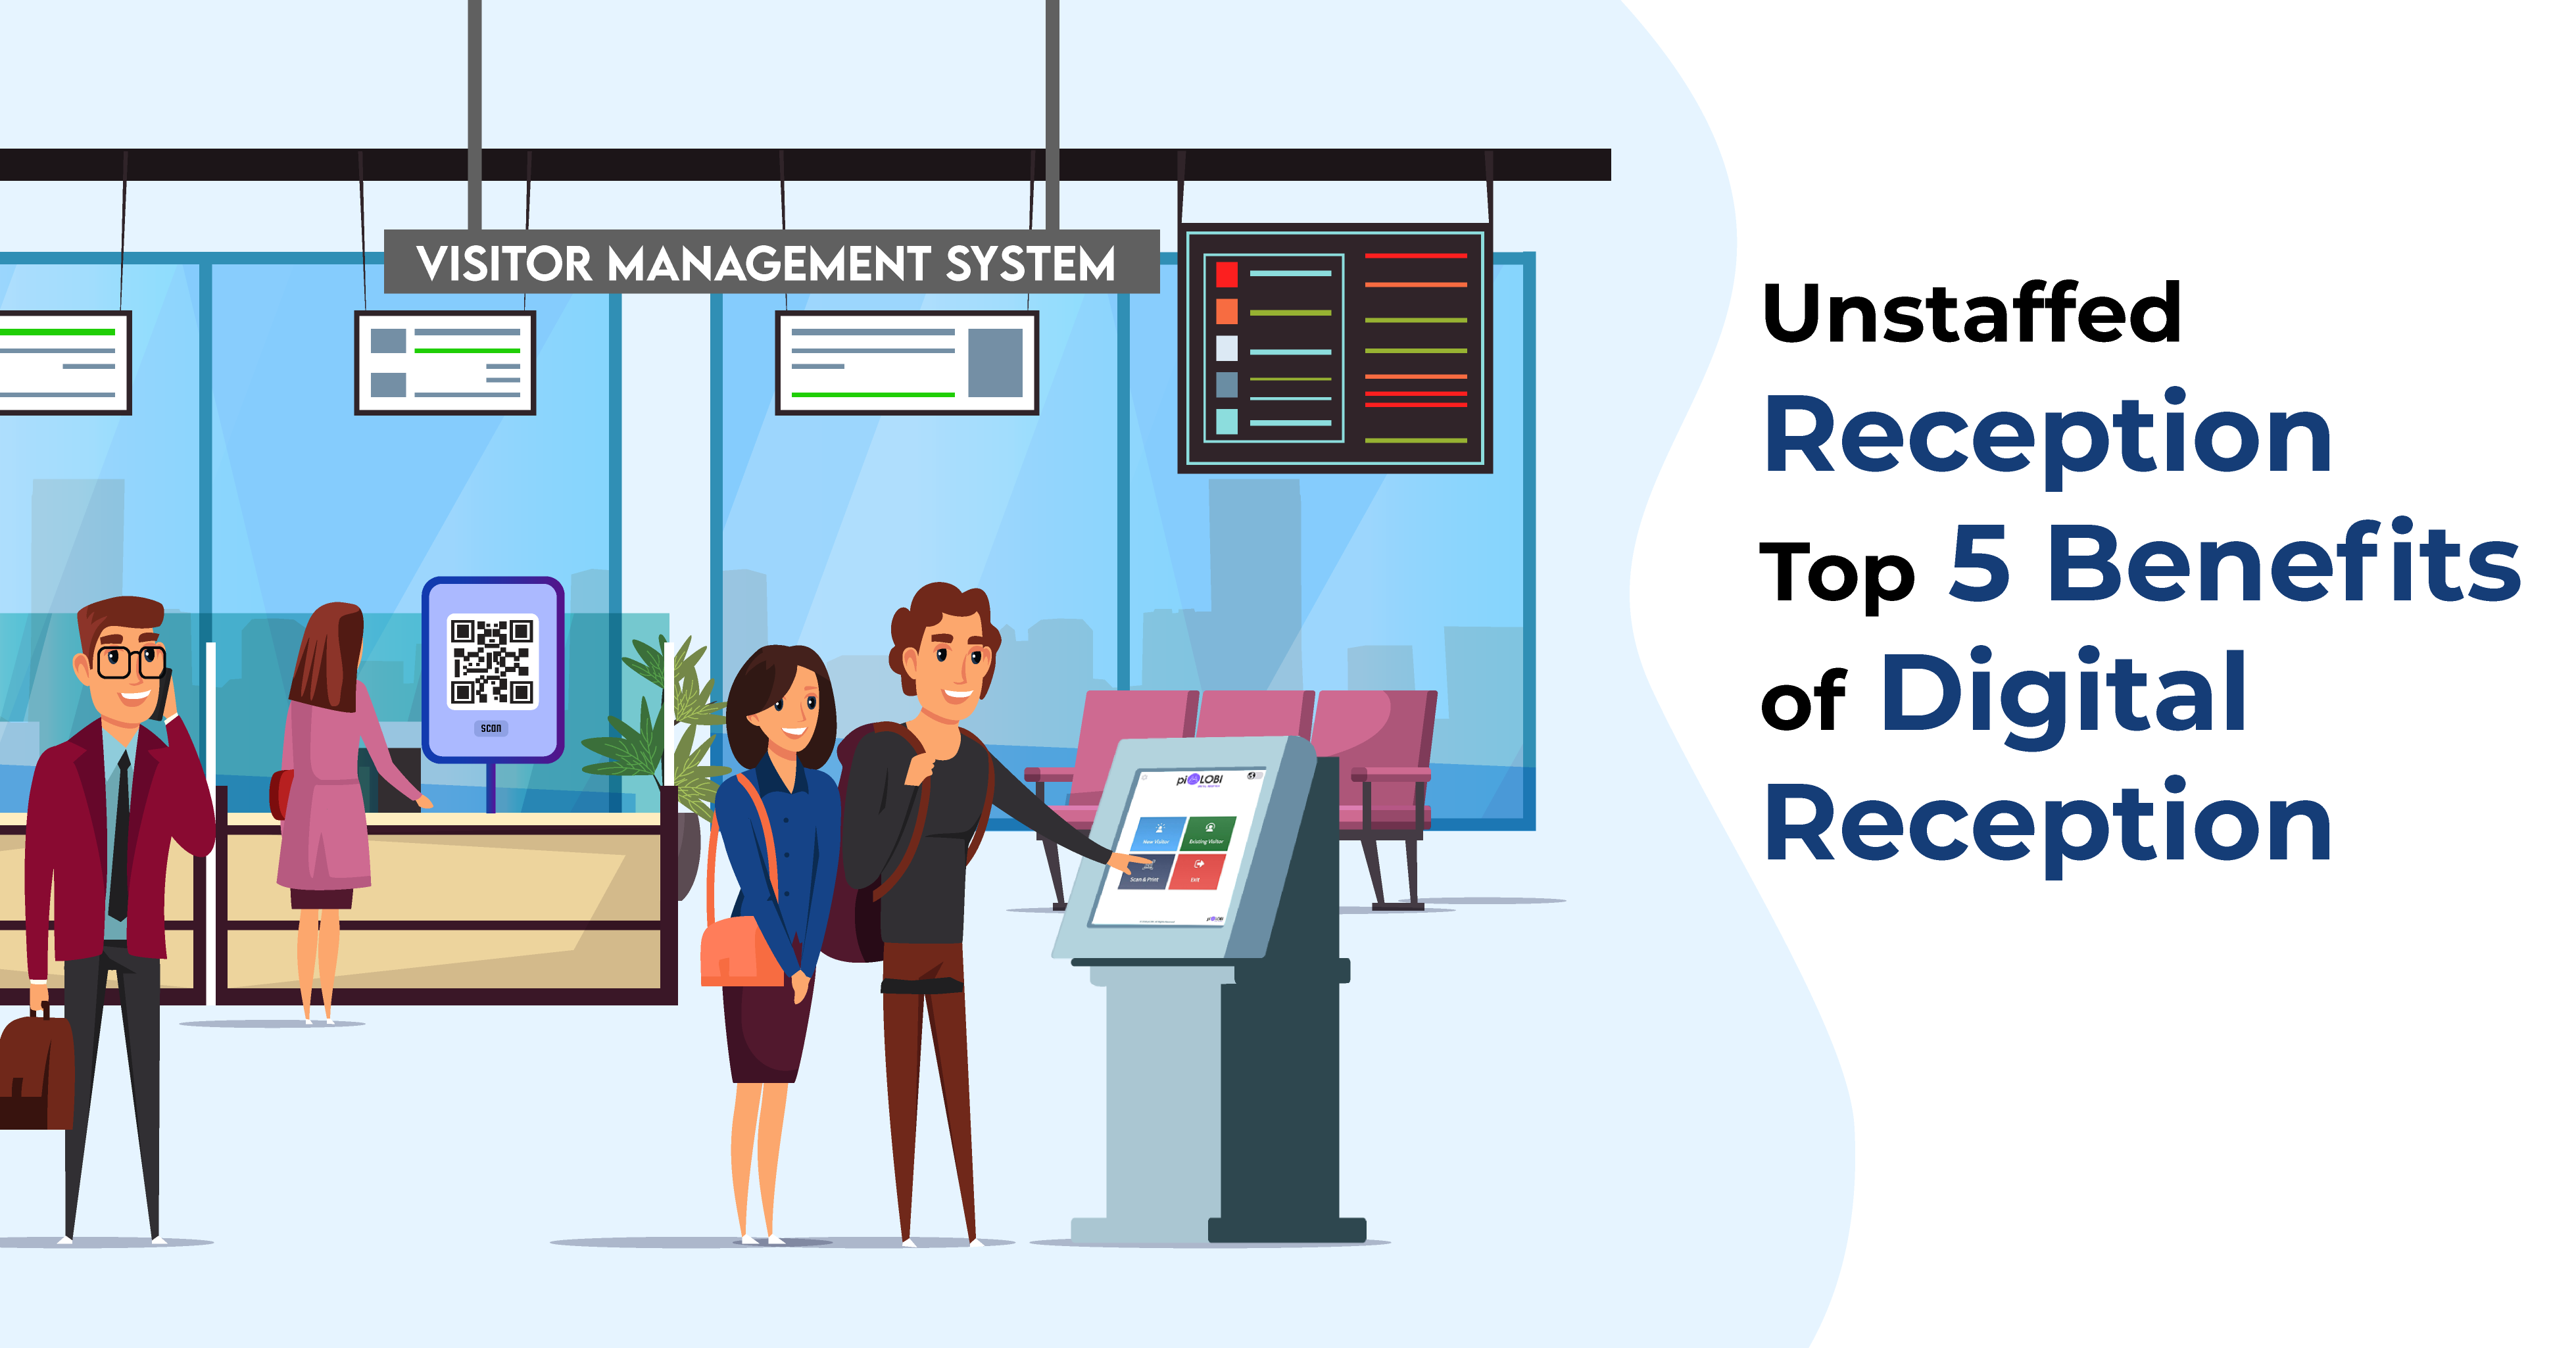 Unstaffed Reception -Top 5 Benefits of Digital Reception